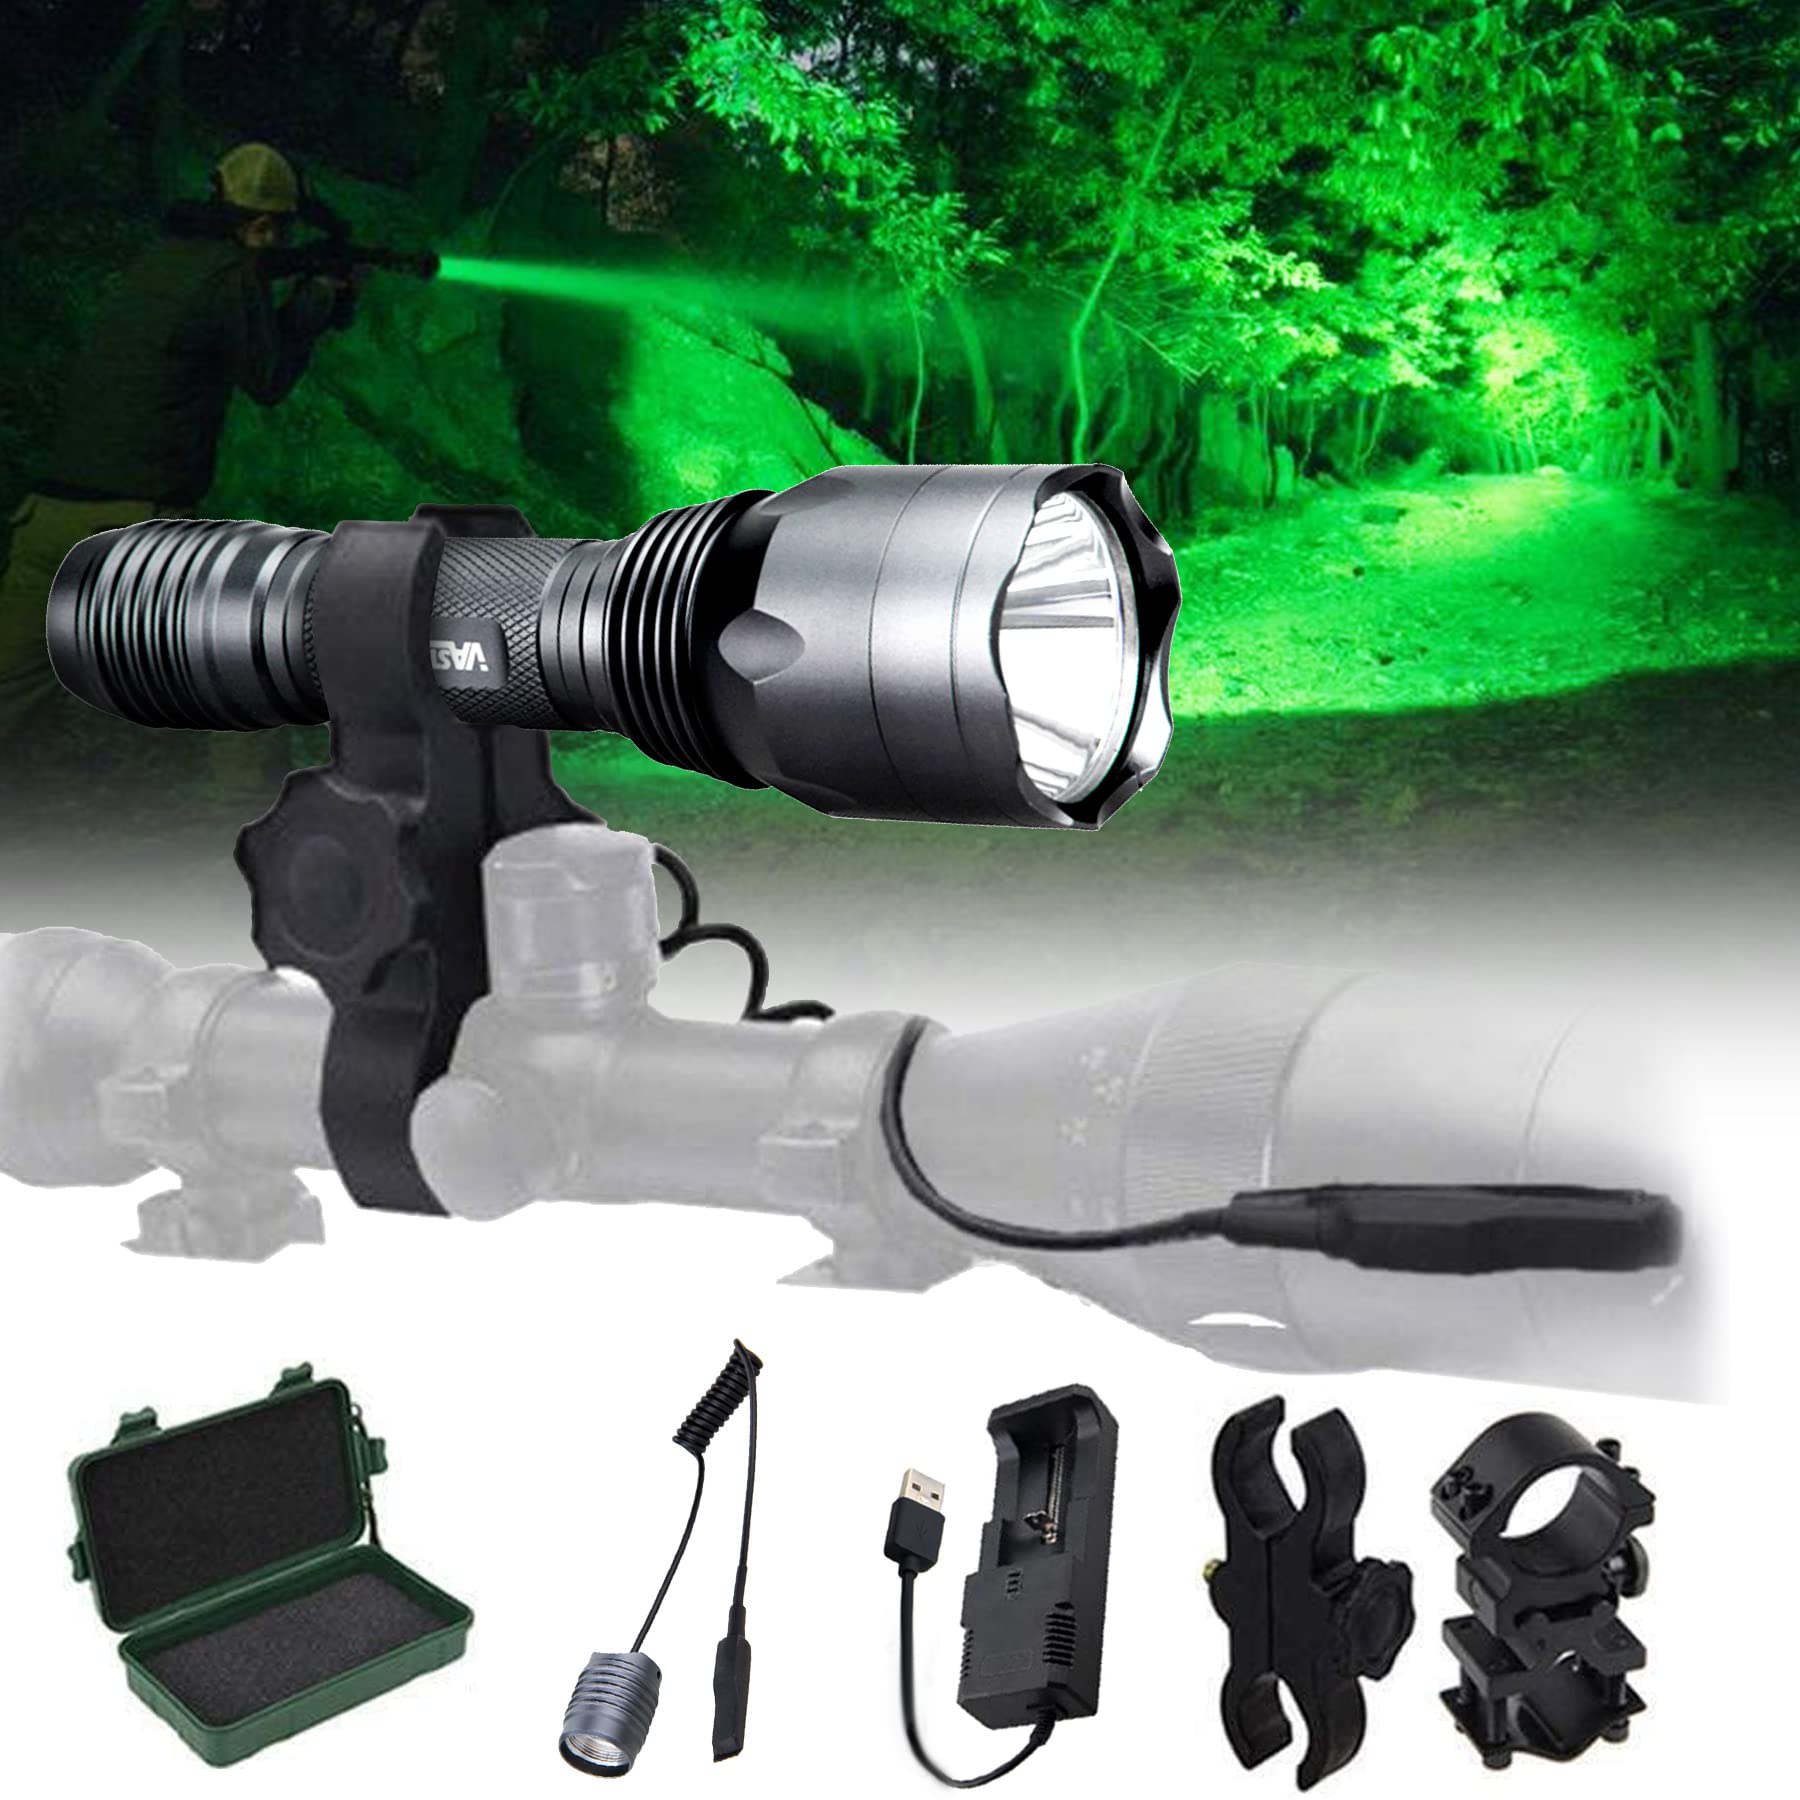 VASTFIRE 350 Yard LED Green Flashlight Kit Hog Predator Long Range Night Hunting Light Dual Pressure Switch Barrel Scope Mounts